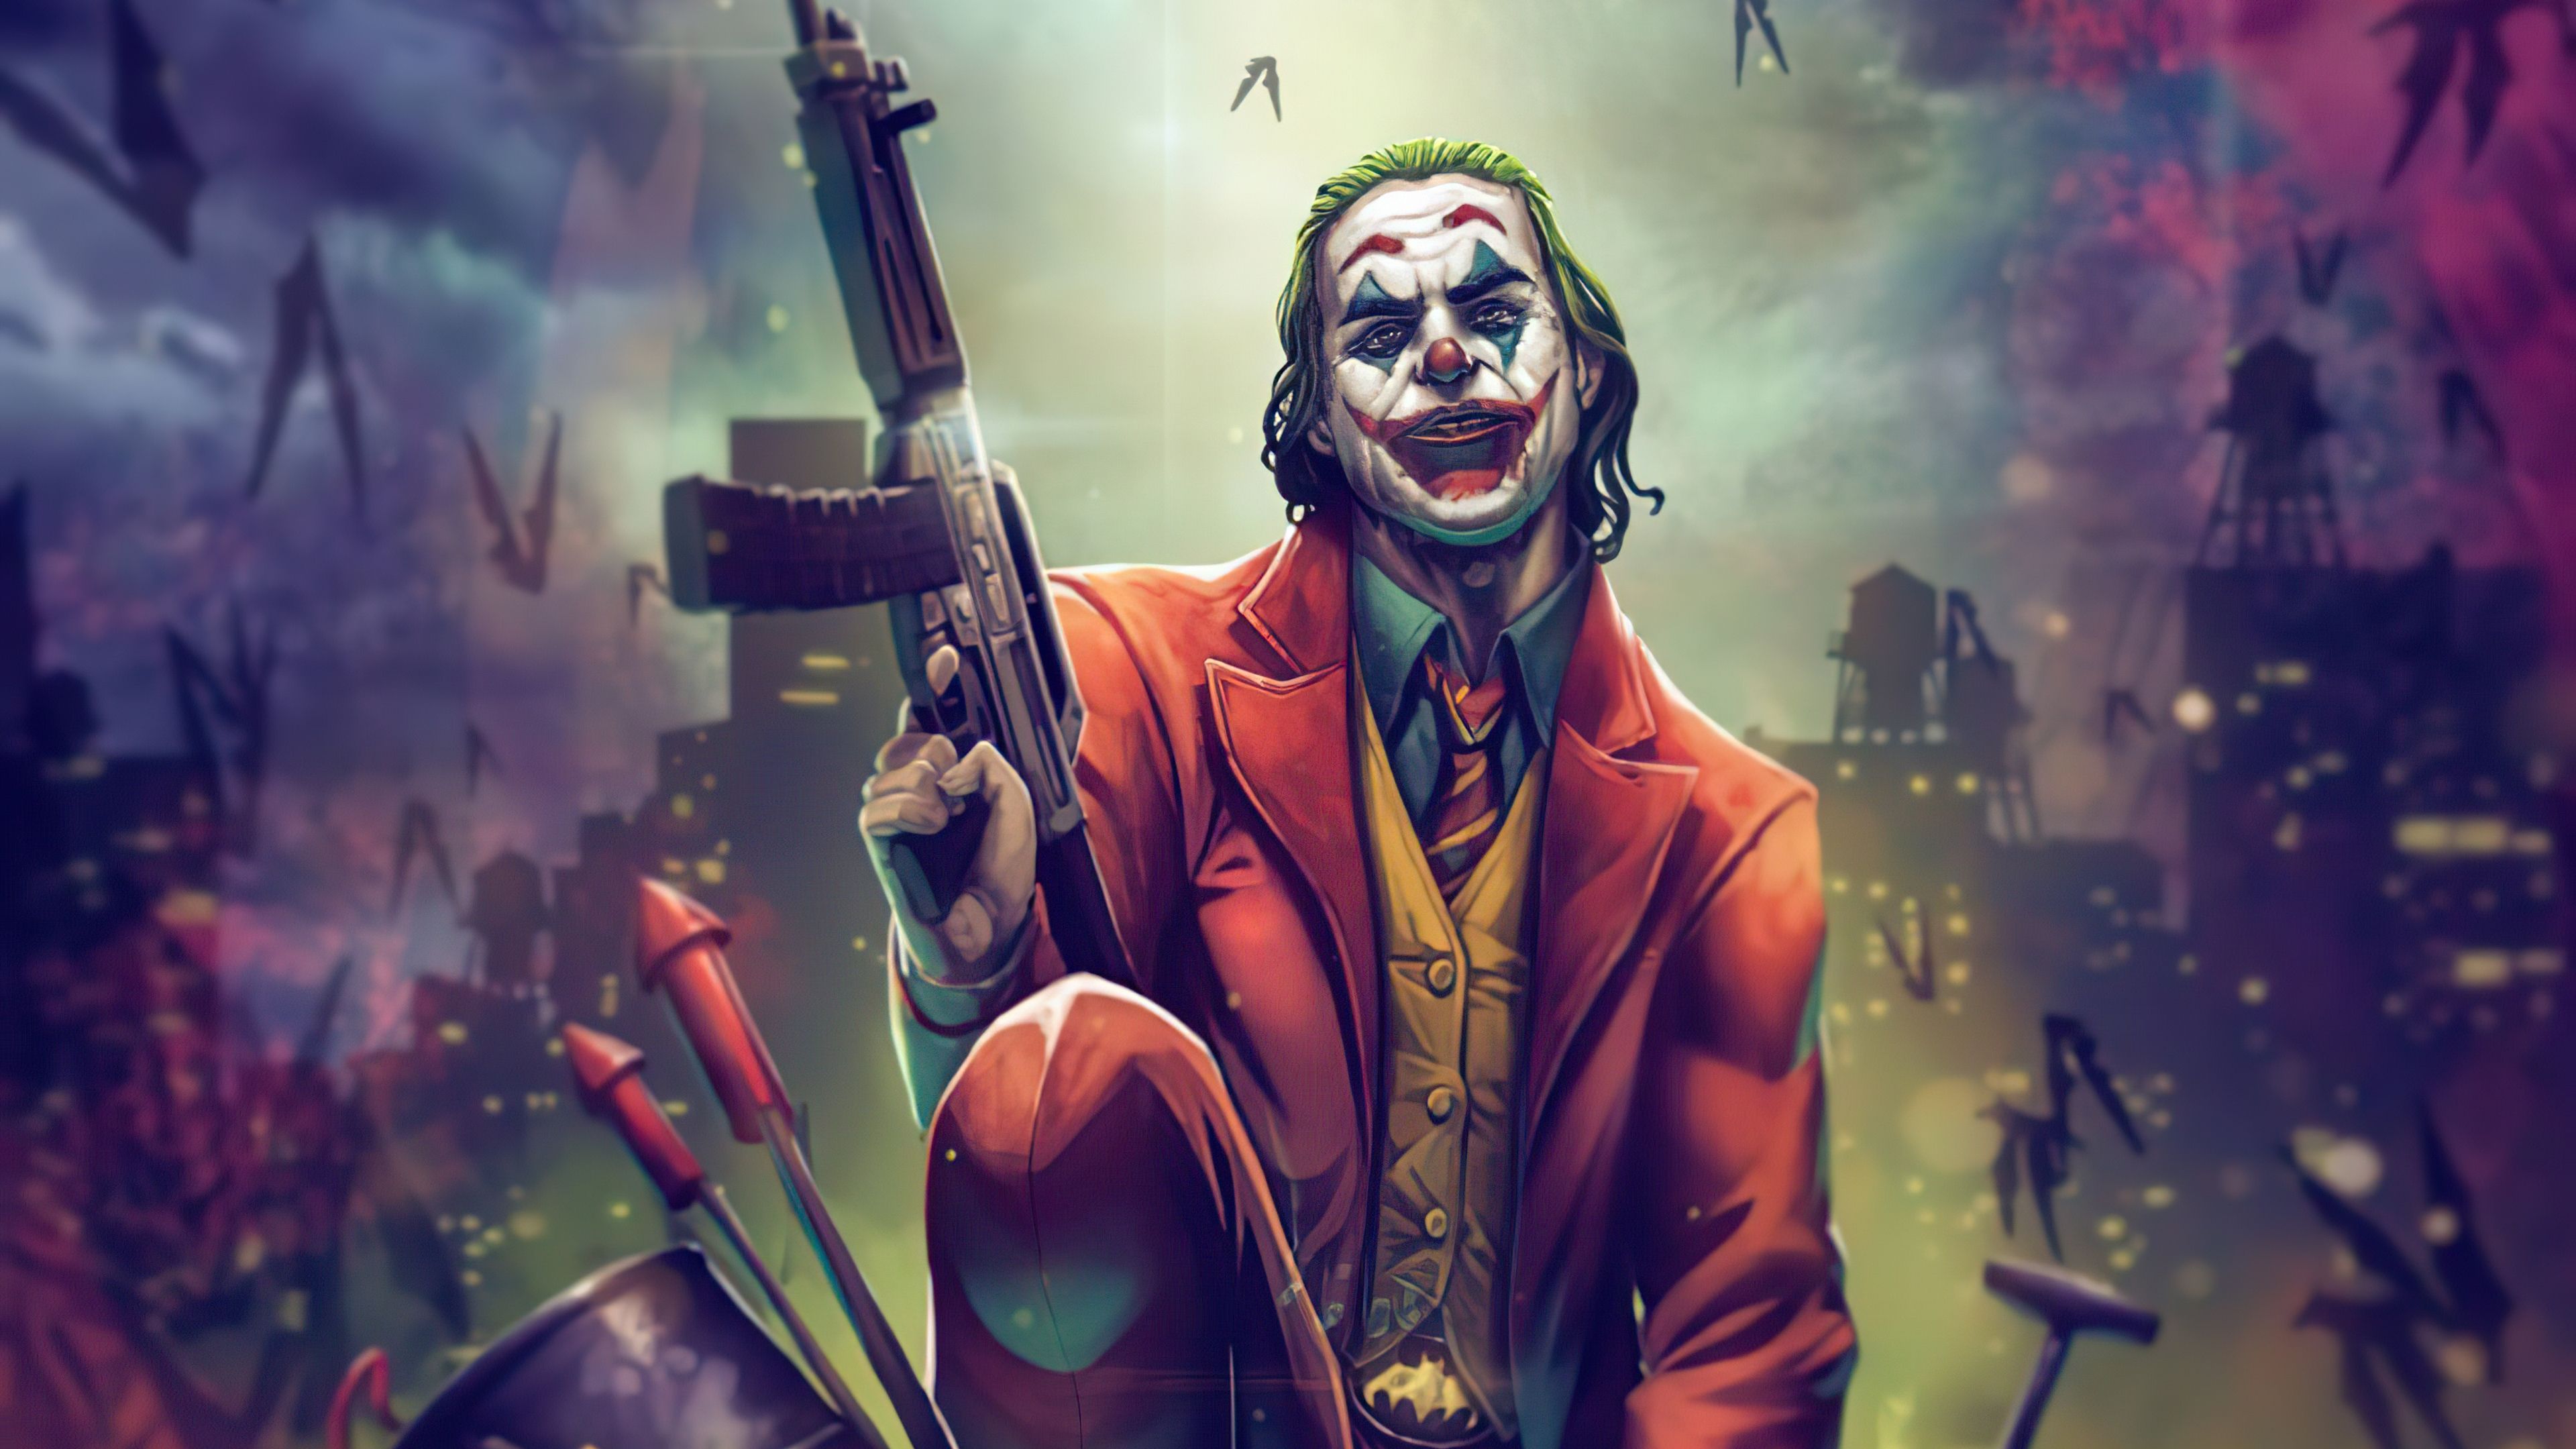 Joker Quotes Hd Wallpaper 4k Download For Pc - 1920x1080 Joker 4k Face ...